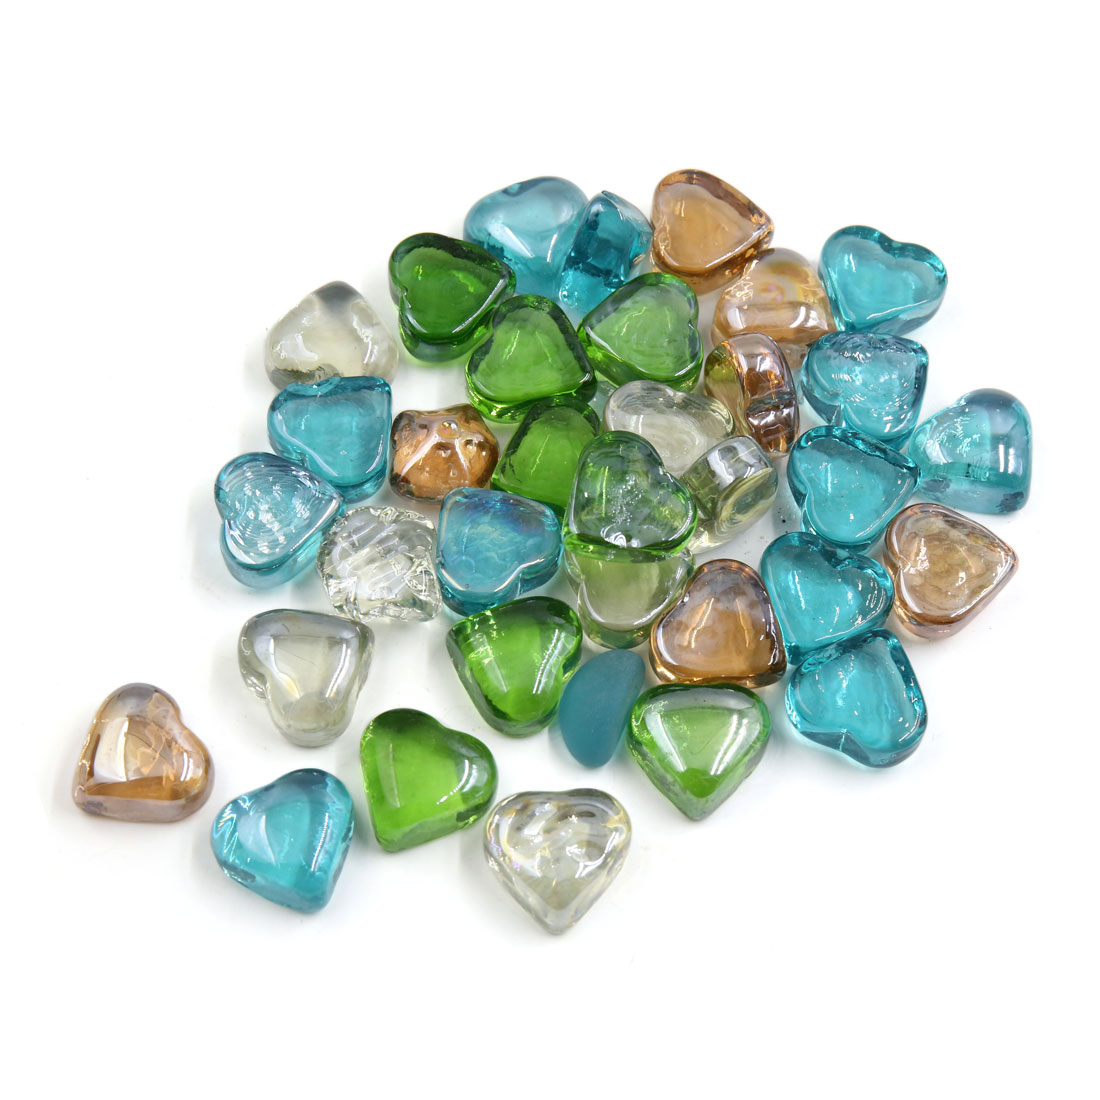 Unique Bargains 500g Multicolor Glass Heart Shaped Fish Tank Aquarium Decor Pebble Bead Stones